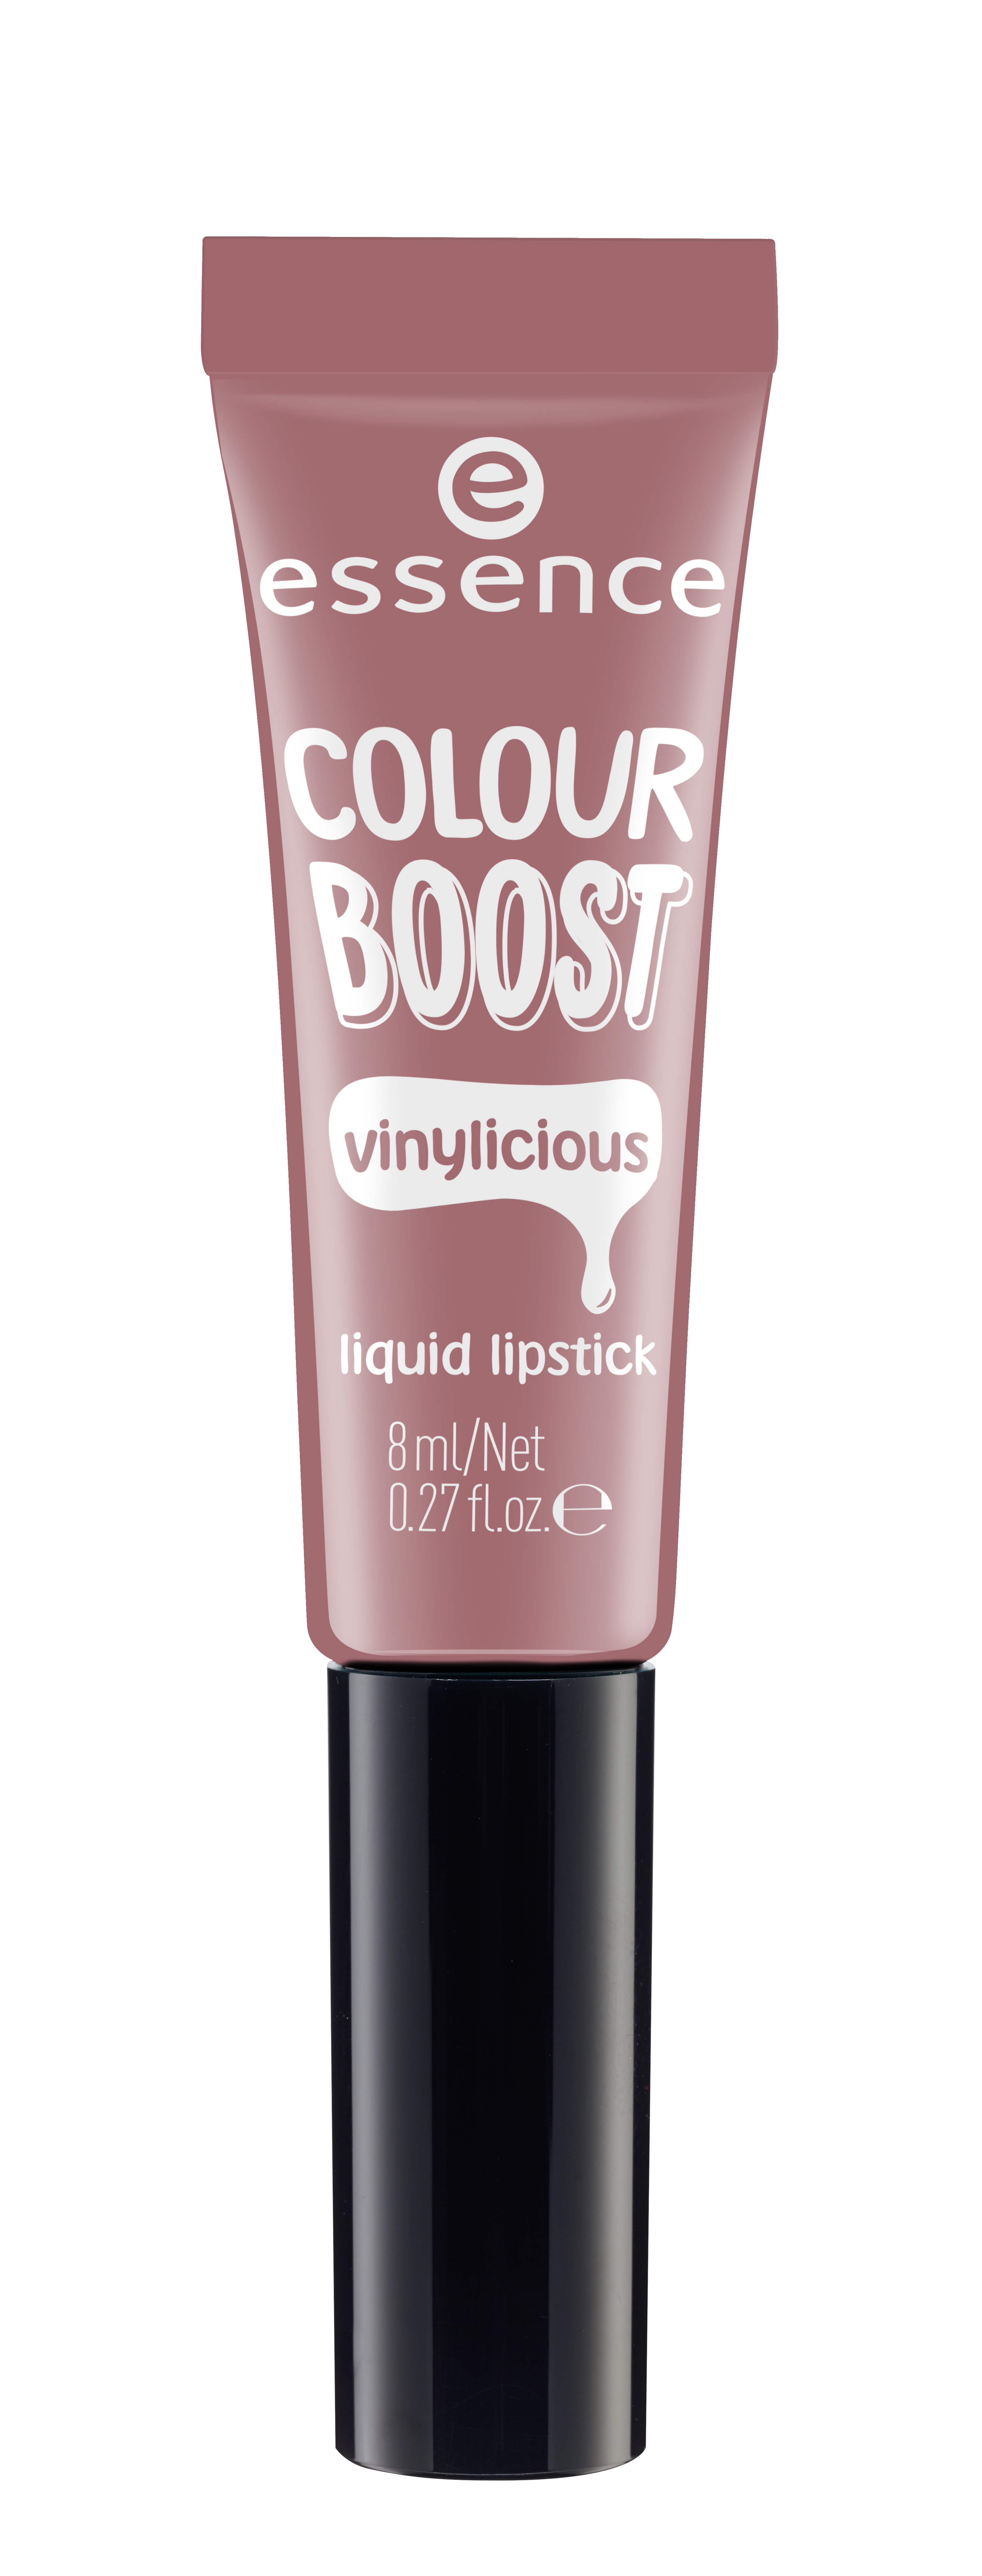 ess. colour boost vinylicious liquid lipstick 04